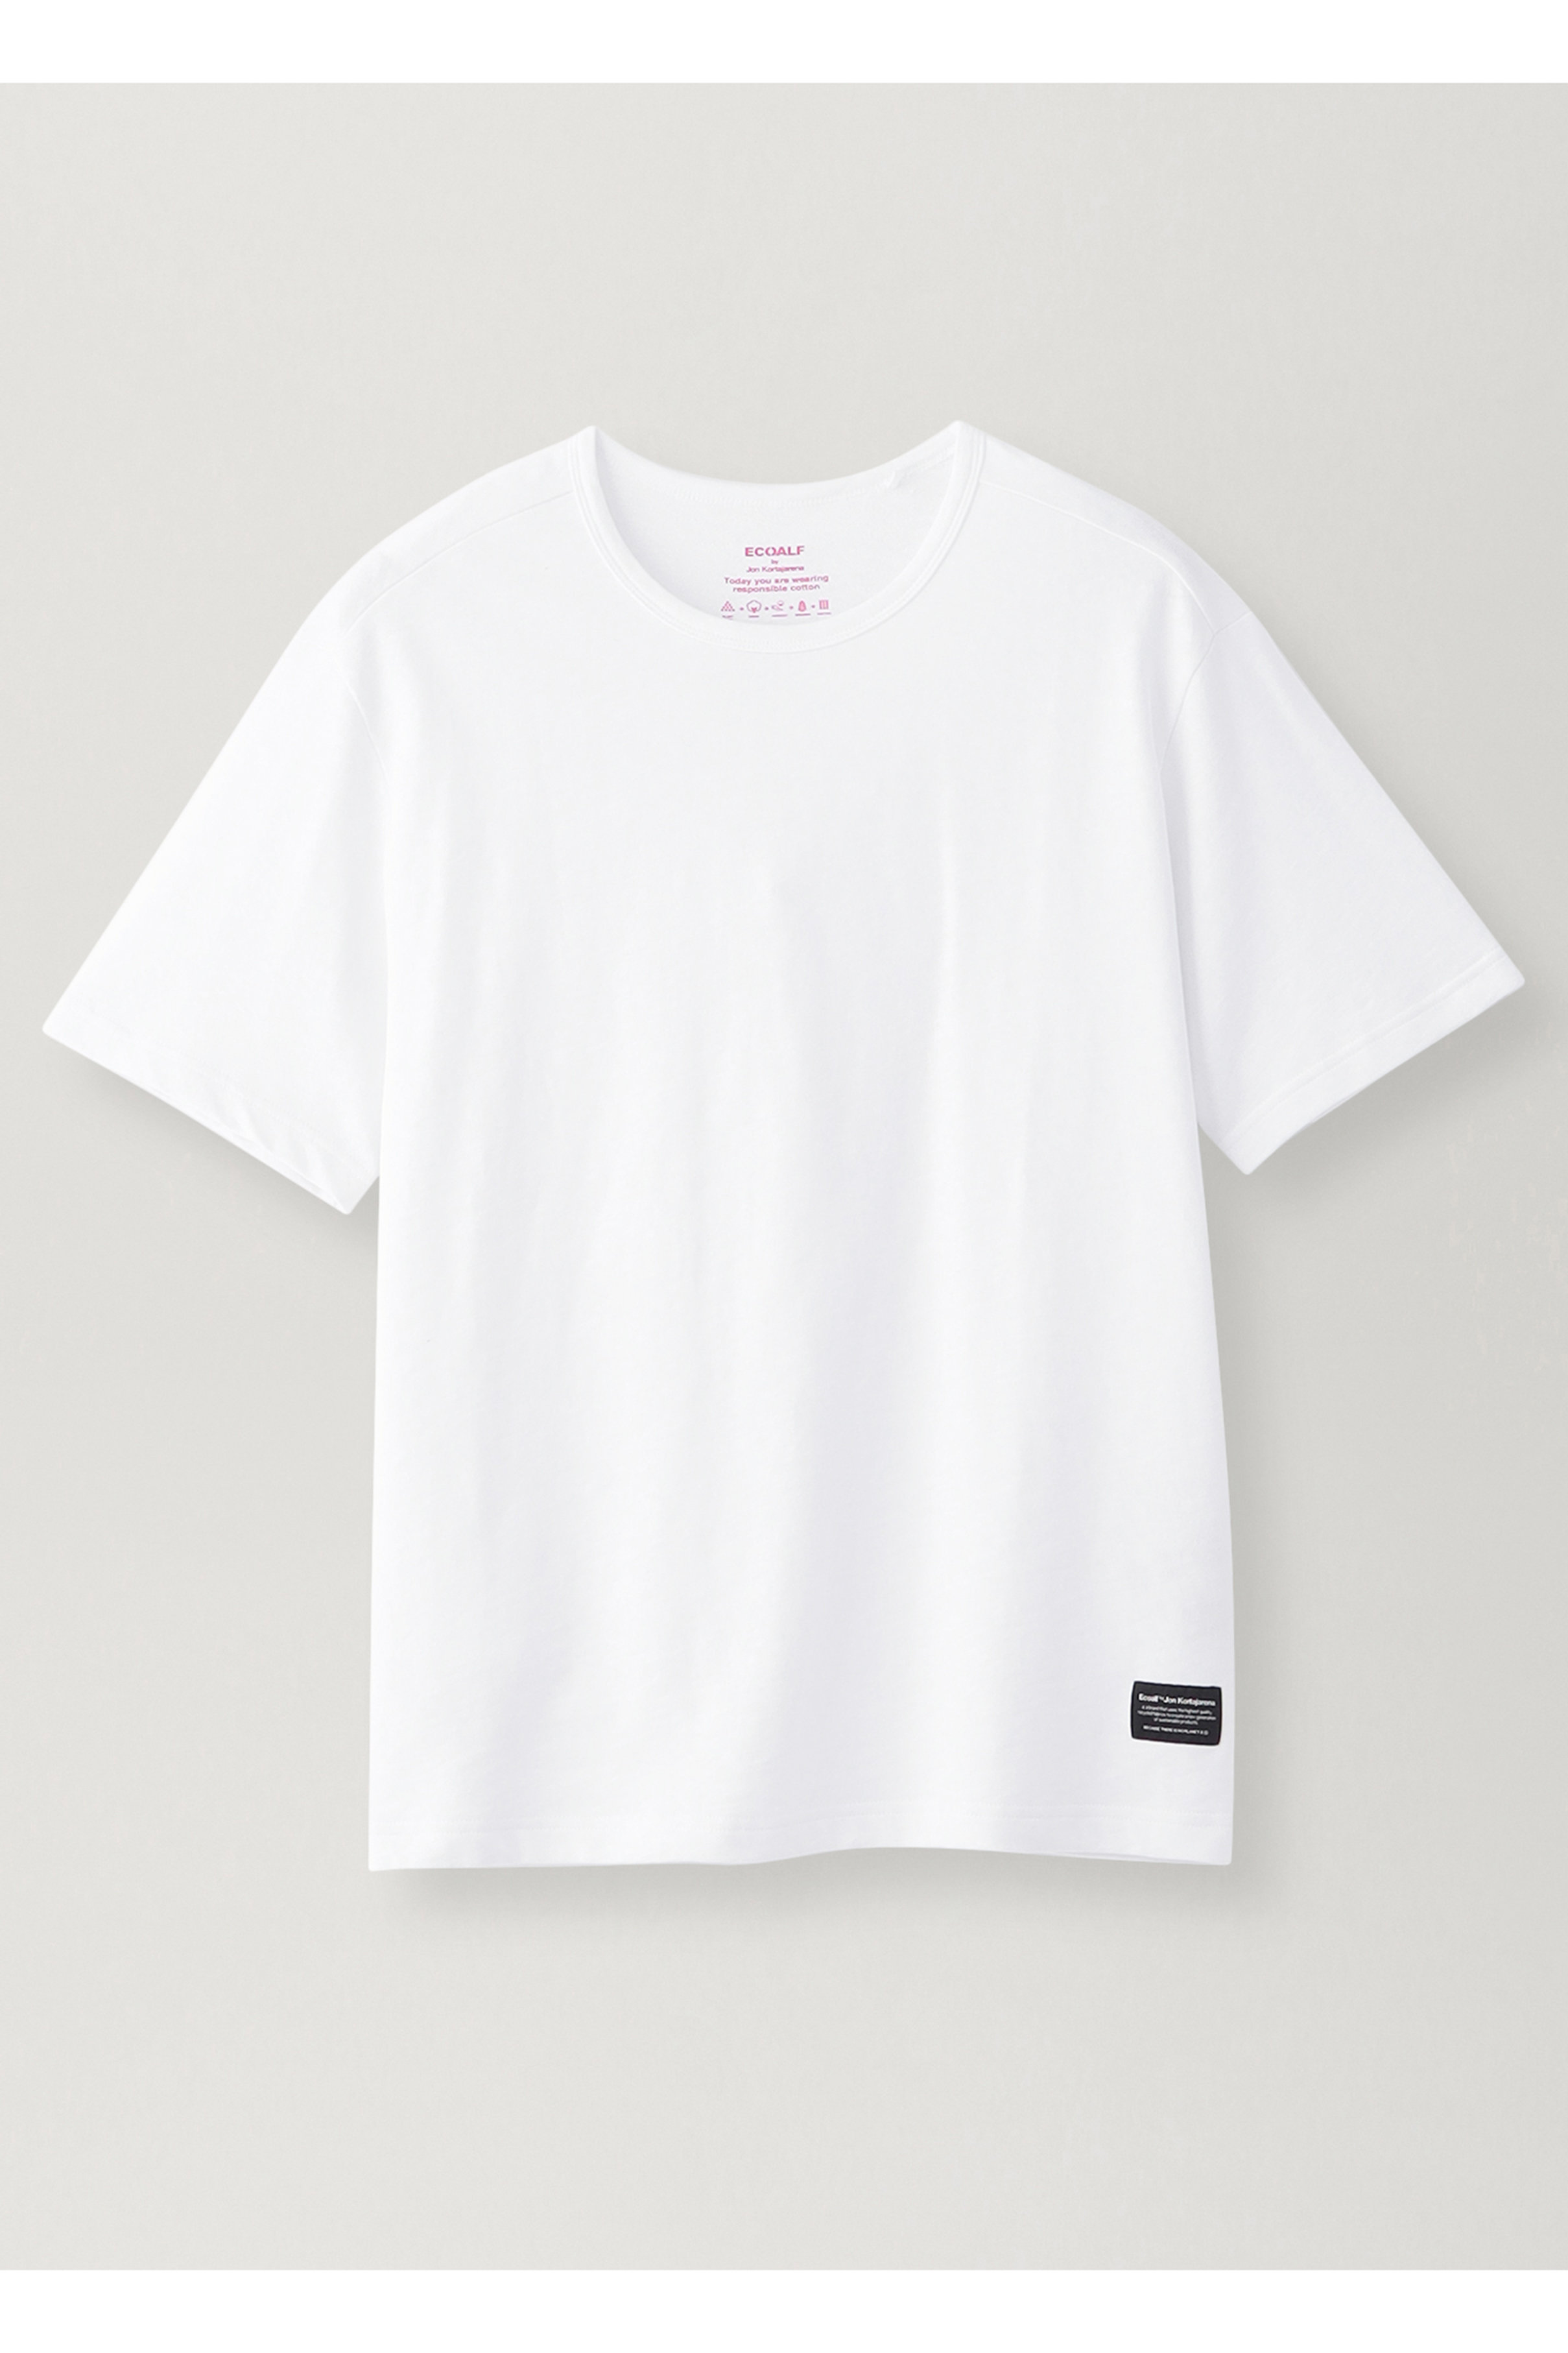  ECOALF 【MEN】【LIMITED】TENESERA メッセージ Tシャツ / TENESERA T-SHIRT UNISEX (ホワイト M) エコアルフ ELLE SHOP